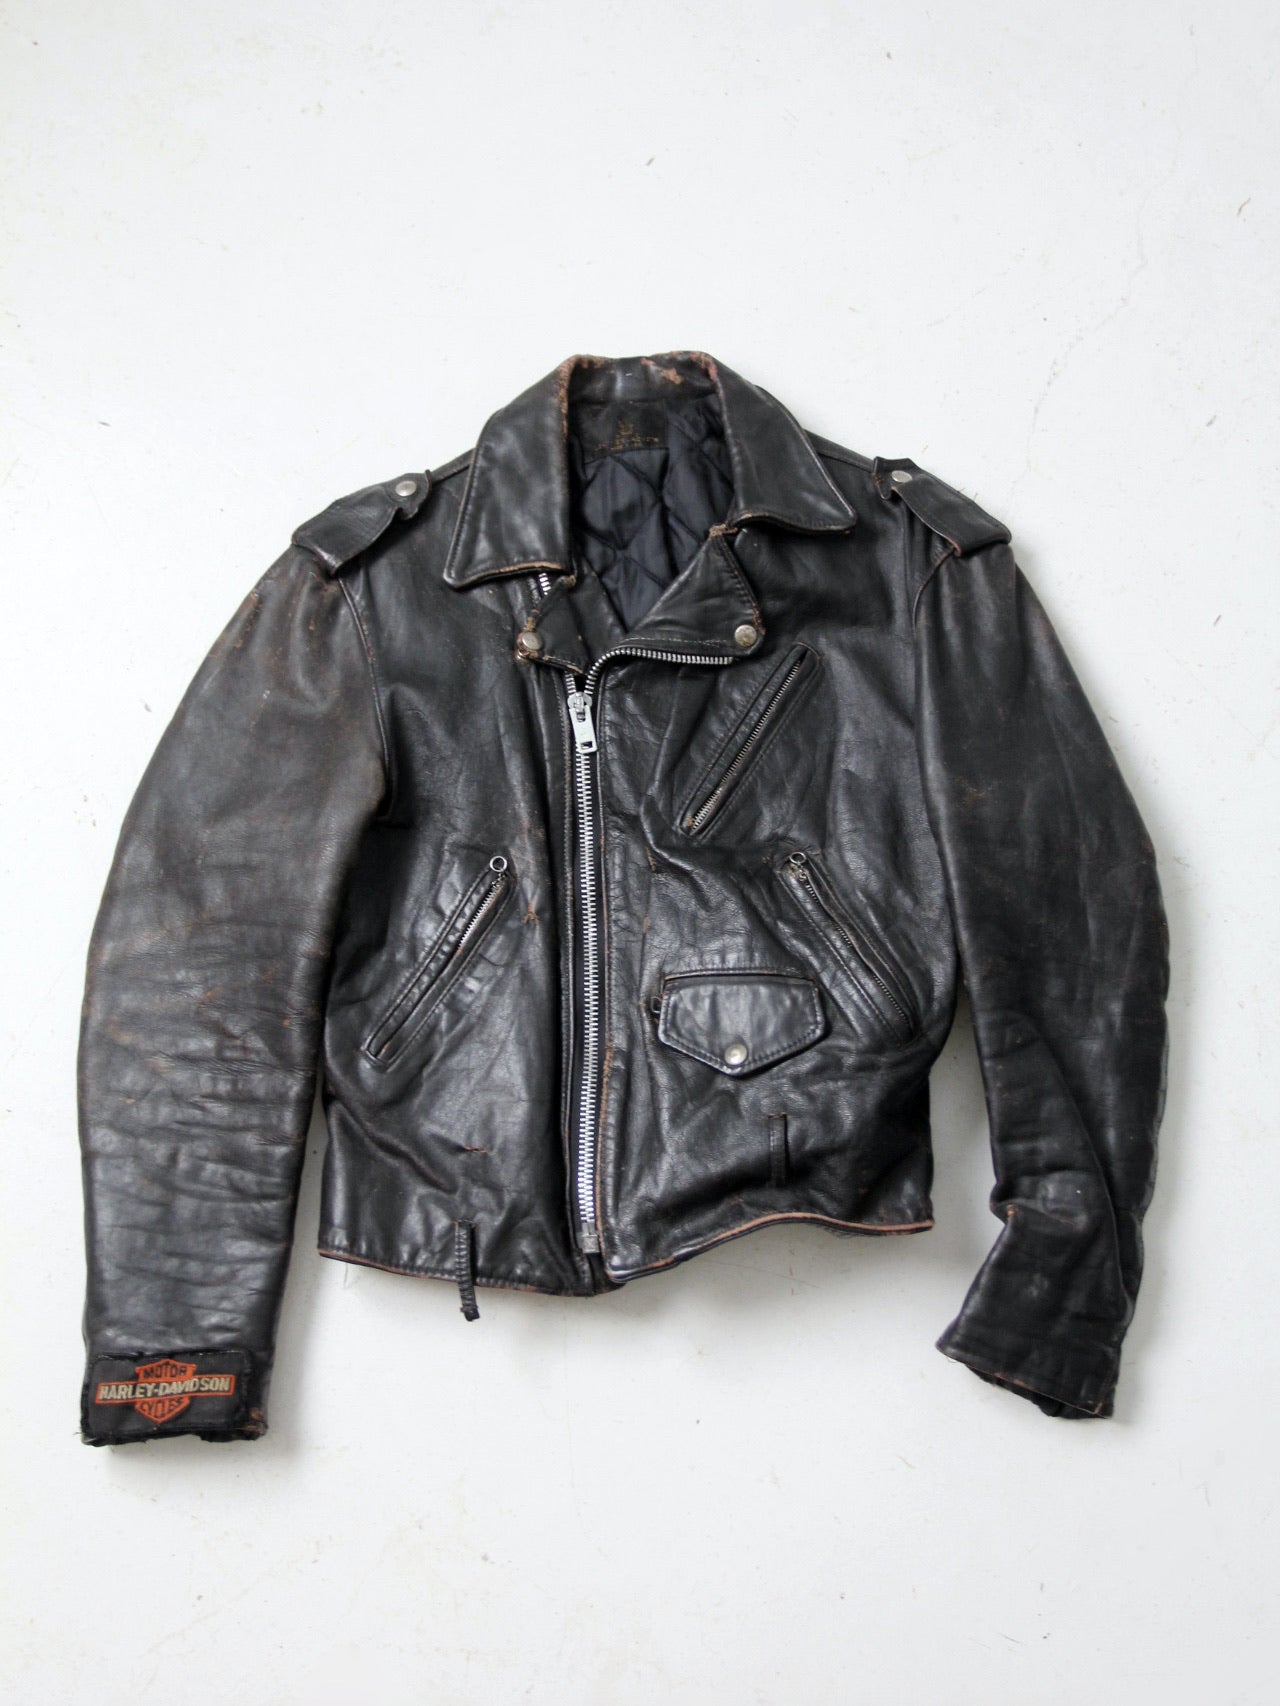 Kids Leather Motorcycle Jacket - Girls Leather Biker Jacket - SKU GRL-AL